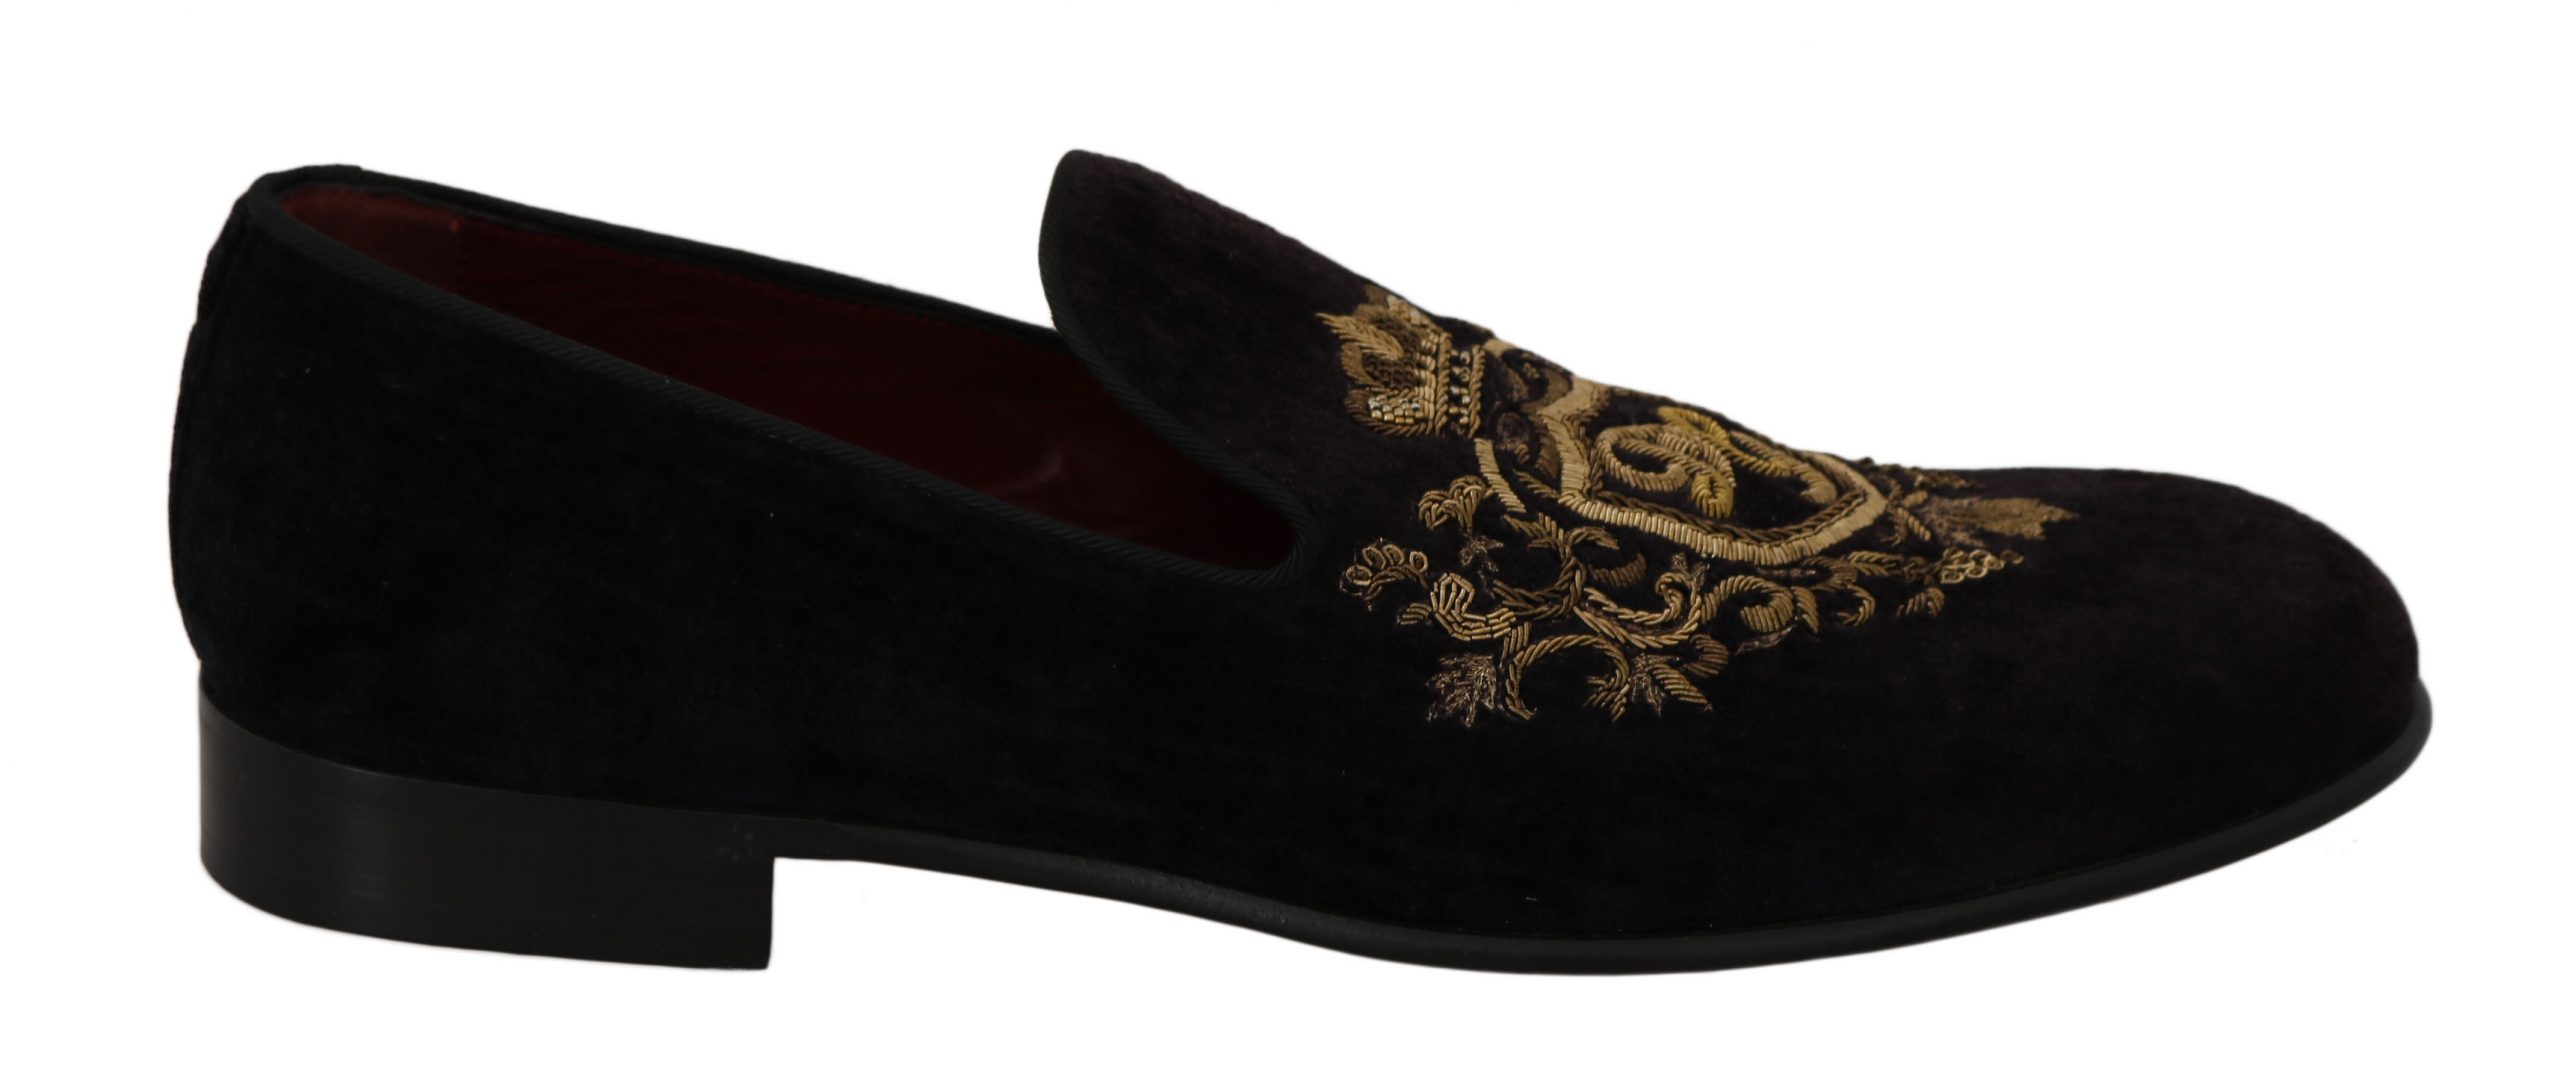 Black Dolce & Gabbana Brown Suede Leather Stiletto Shoes Heels EU39/US6